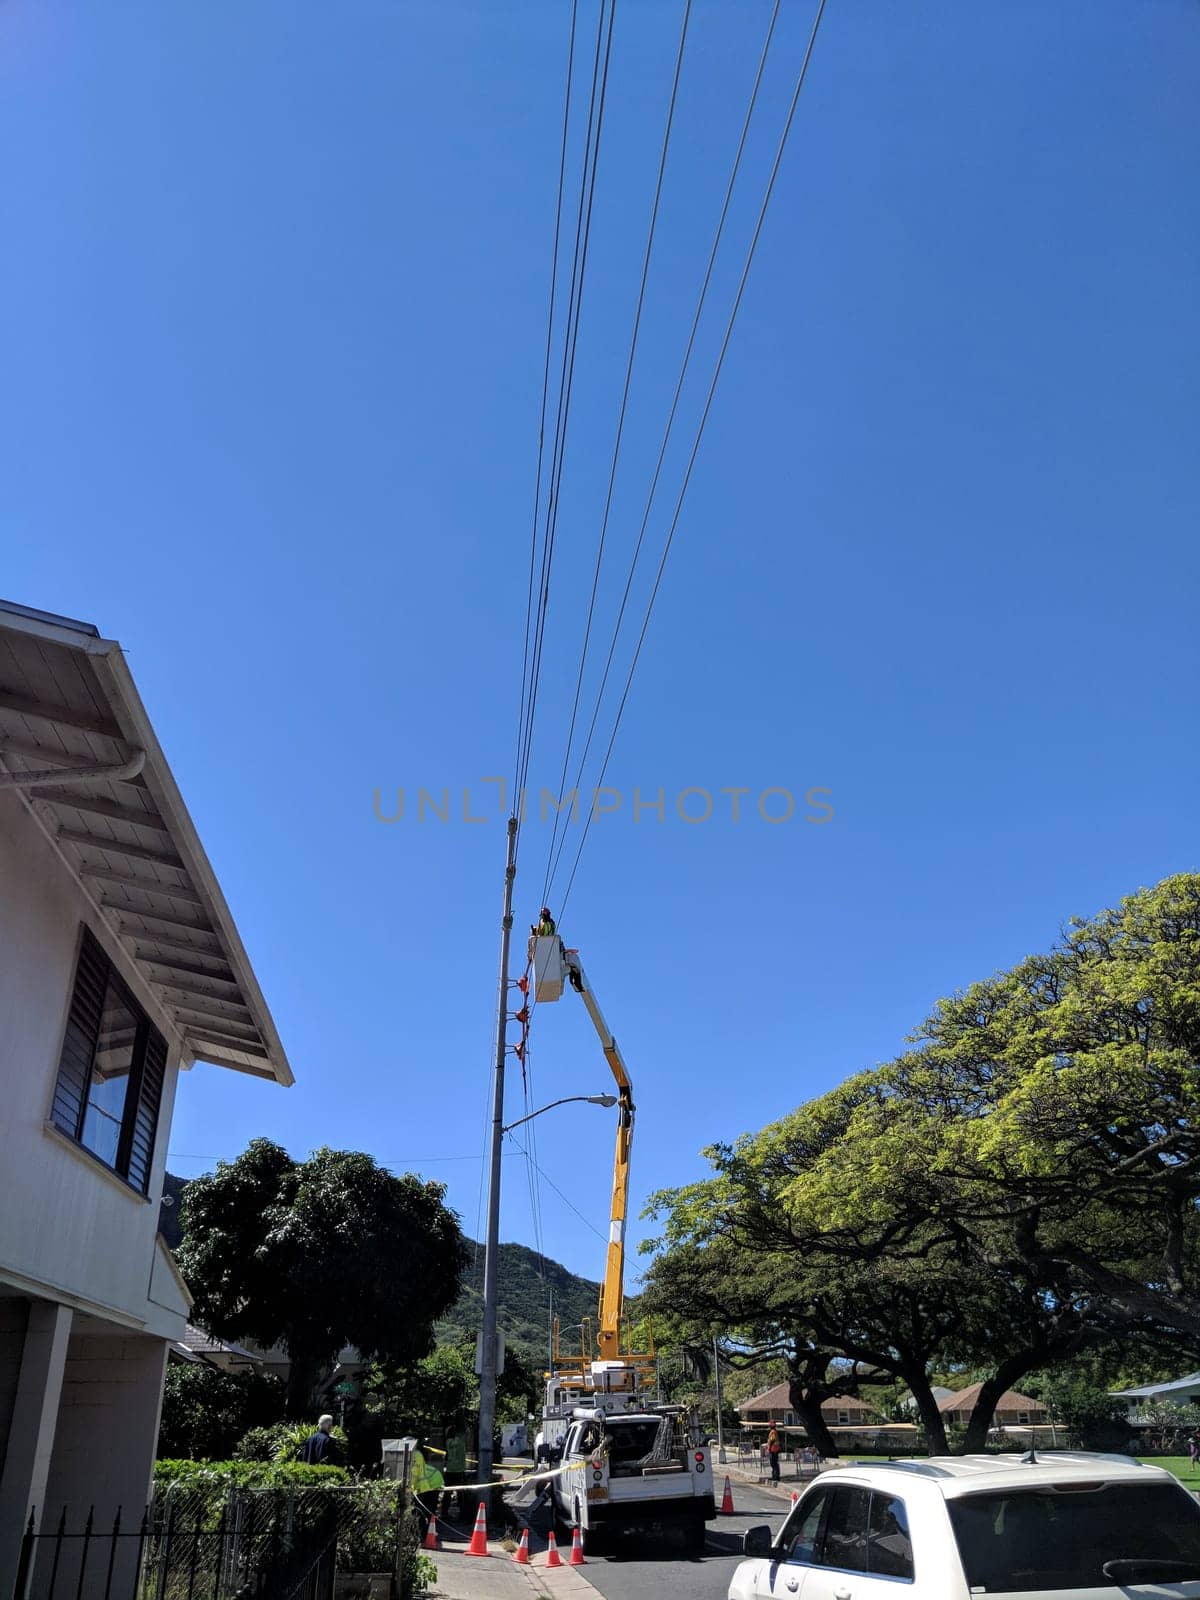 Power Line Maintenance in Waikiki by EricGBVD